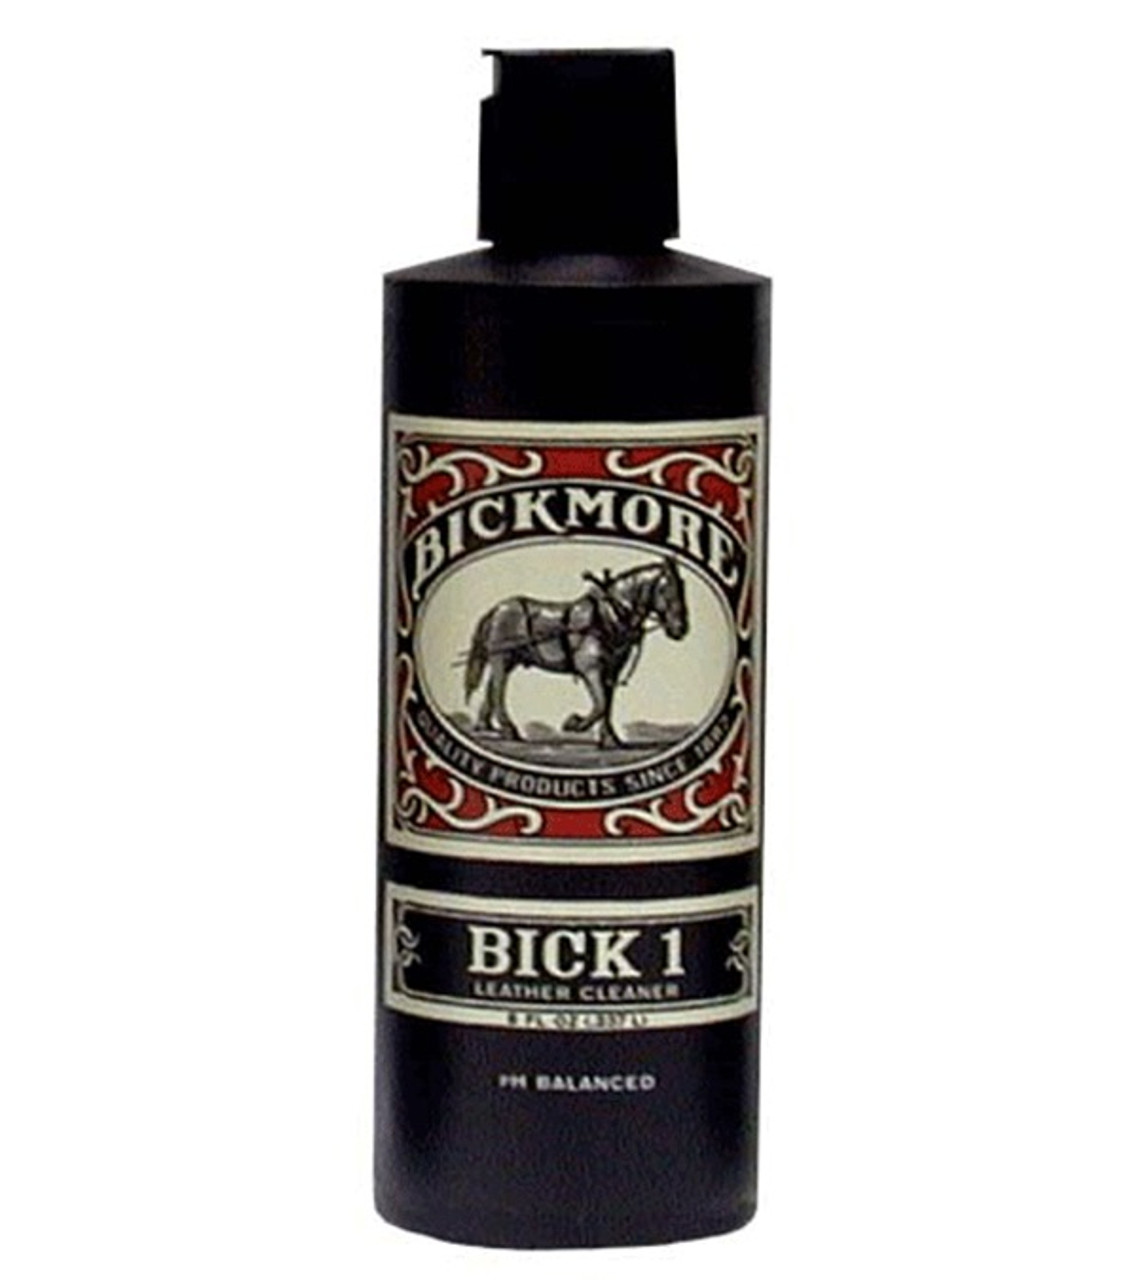 Bickmore Saddle Soap Plus Tin 6.5 oz.